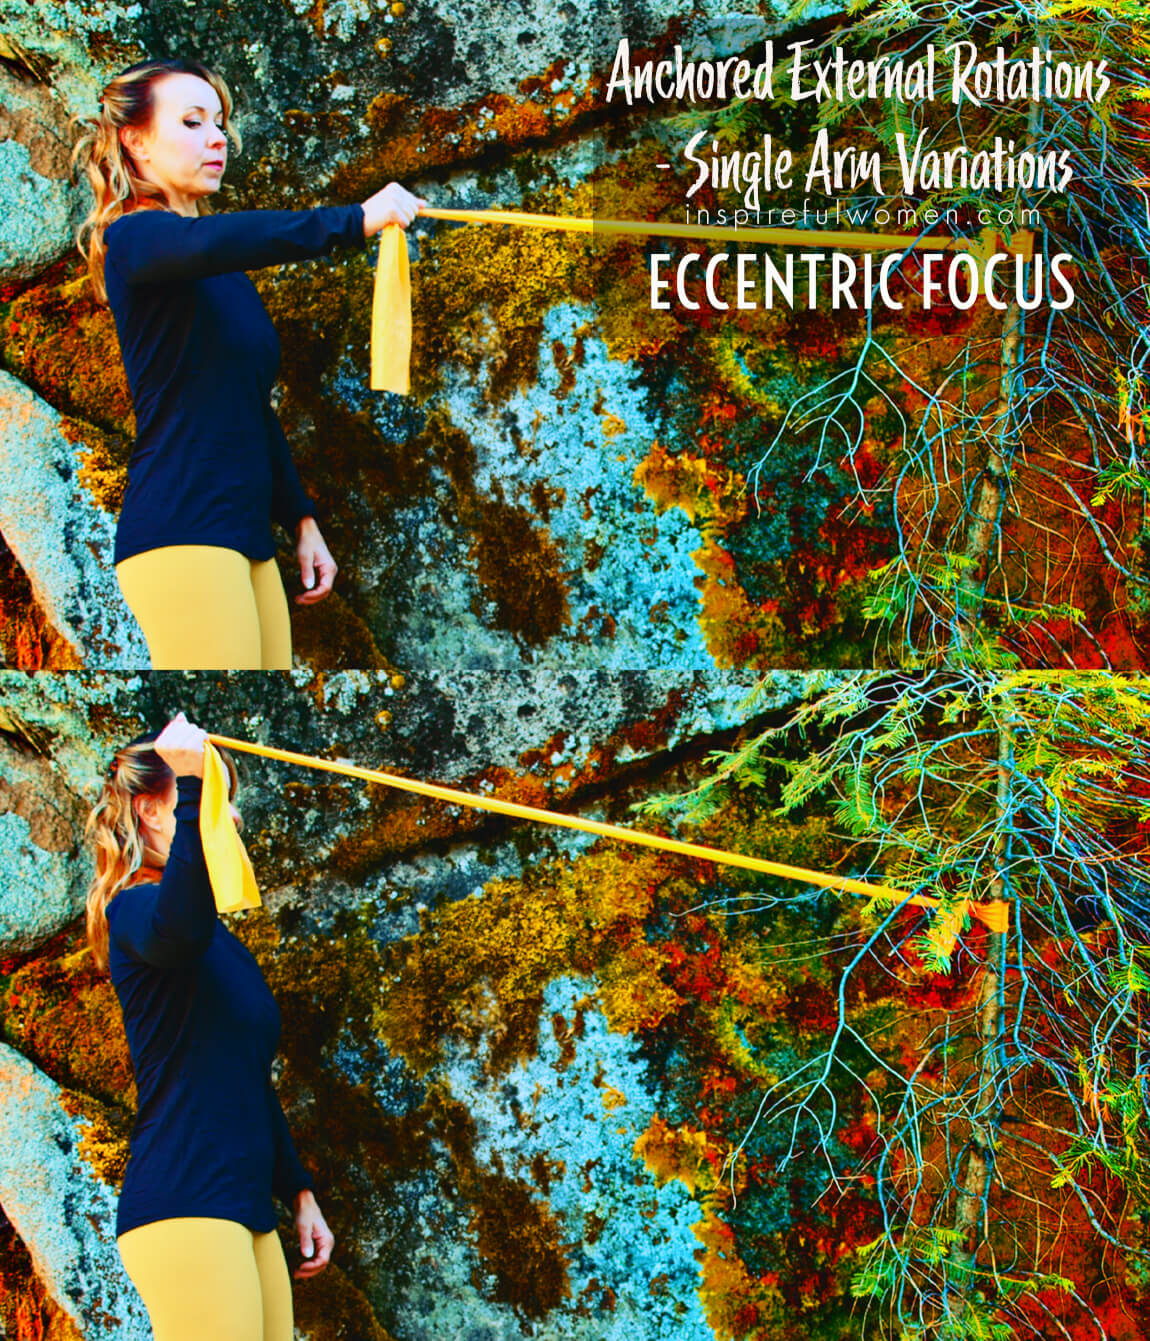 eccentric-focus-anchored-external-rotations-single-arm-variation